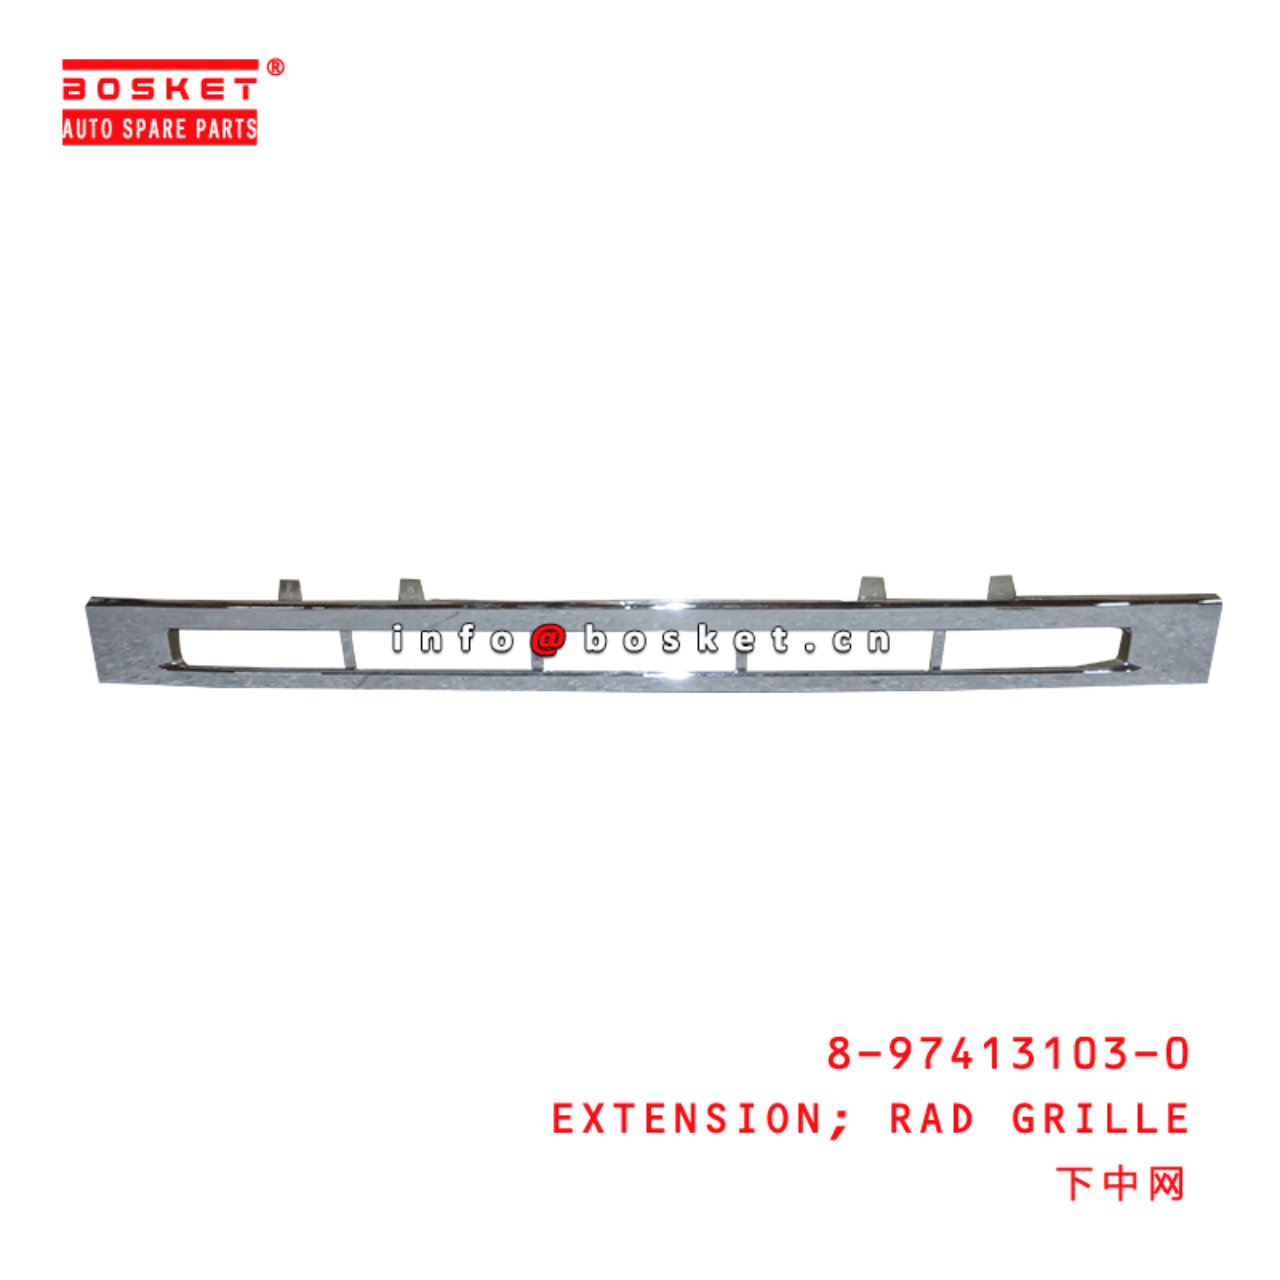  8-97413103-0 Rad Grille Extension 8974131030 Suitable for ISUZU GXR 